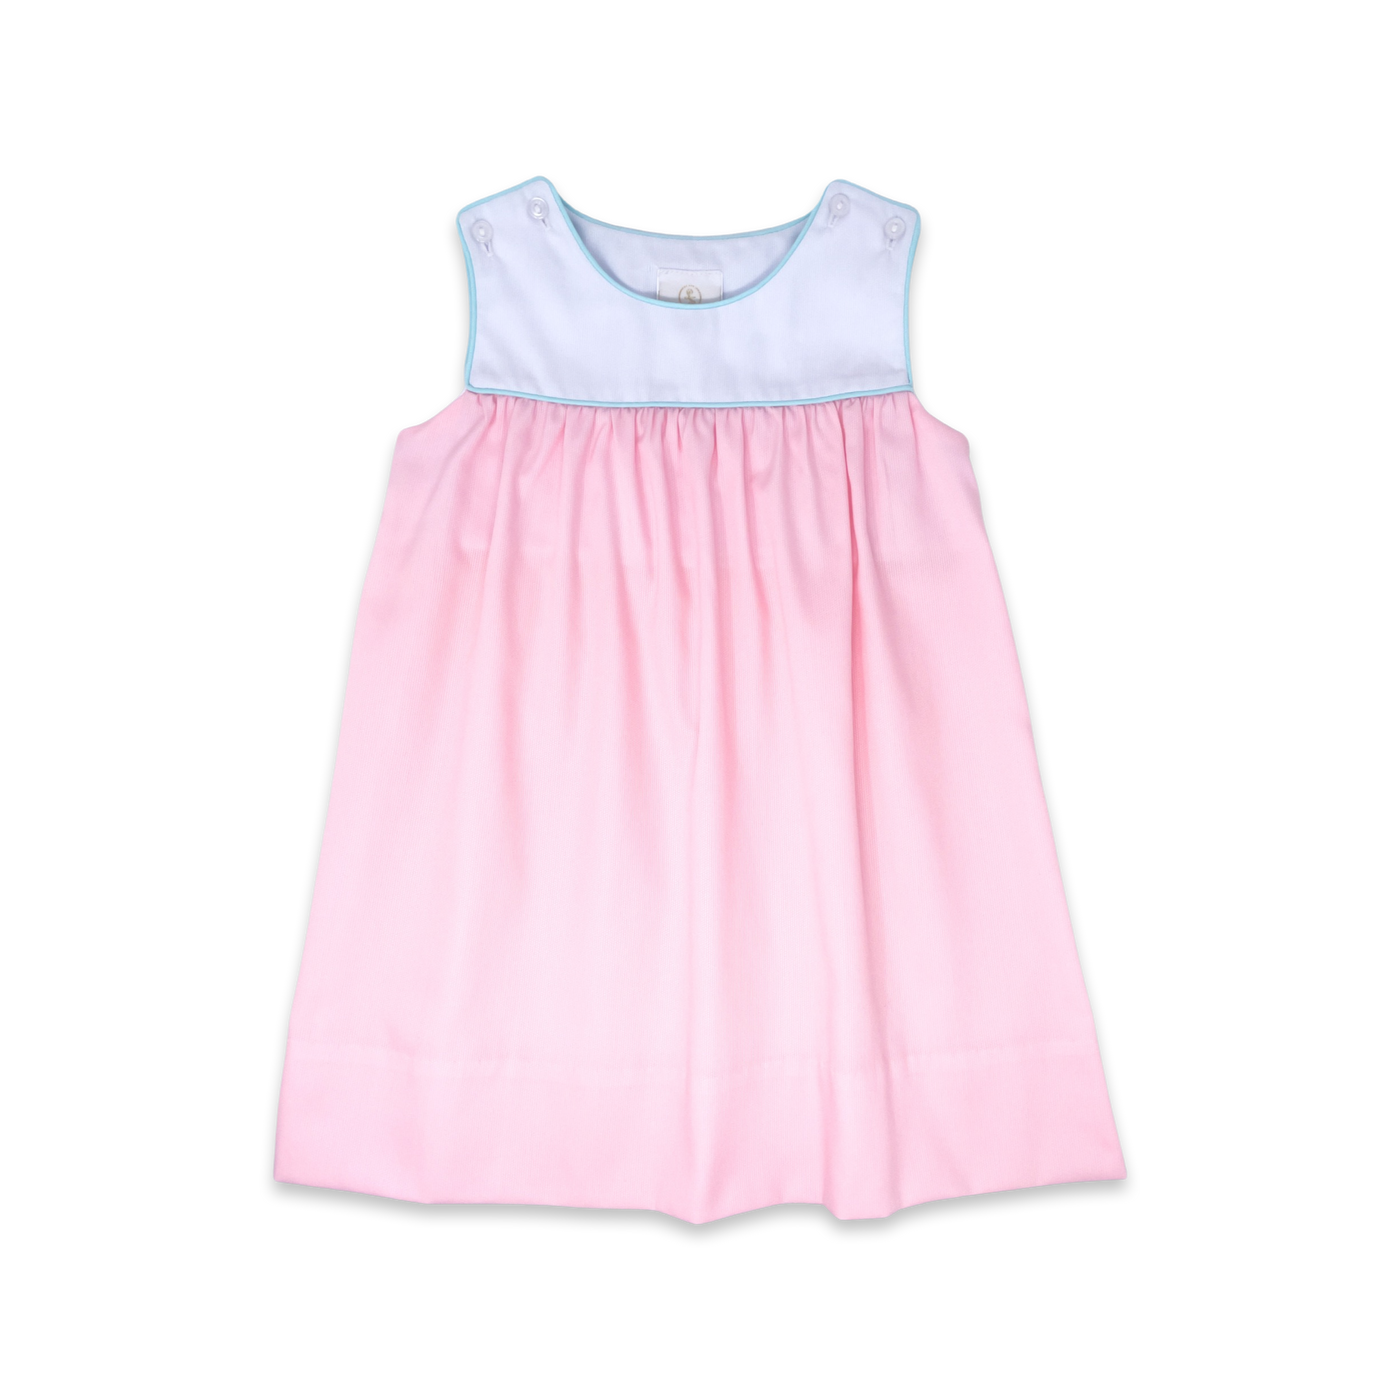 Charming Dress - Avenue Pink/Mint